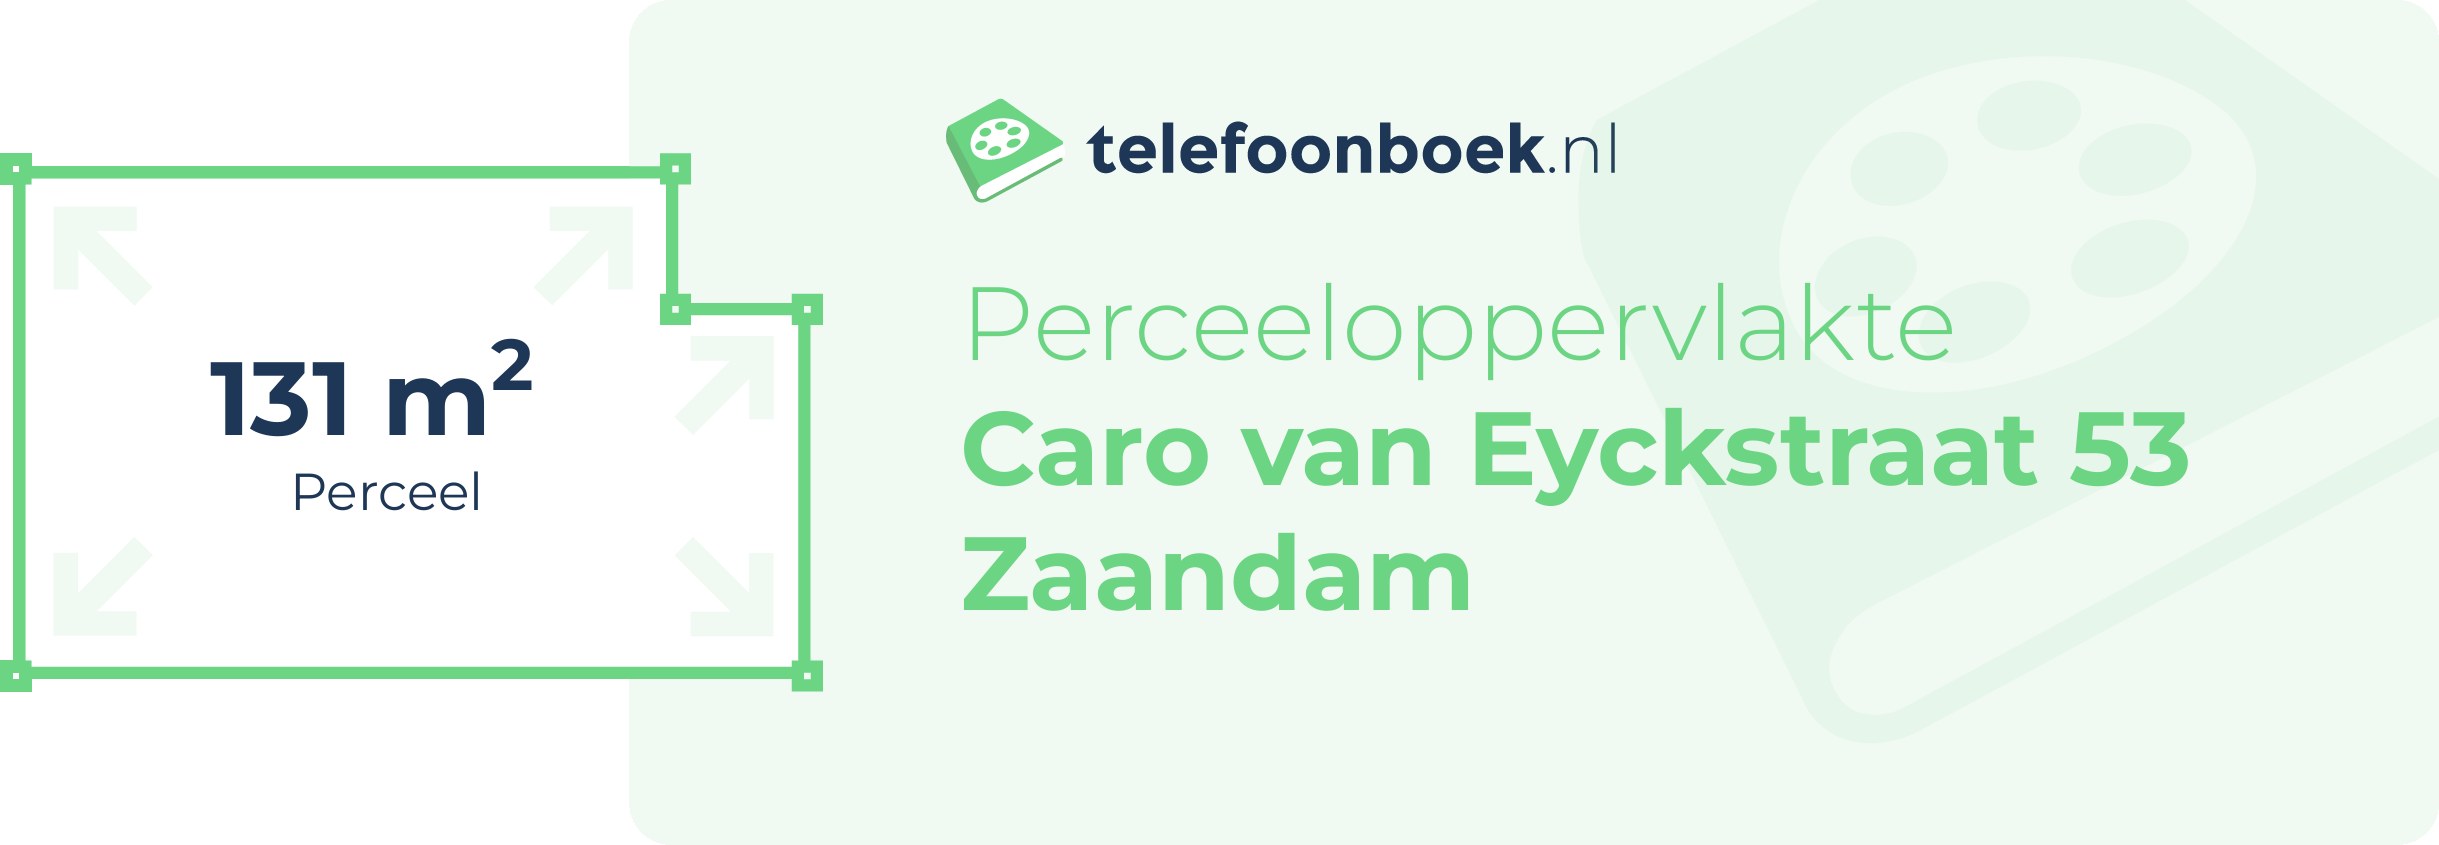 Perceeloppervlakte Caro Van Eyckstraat 53 Zaandam